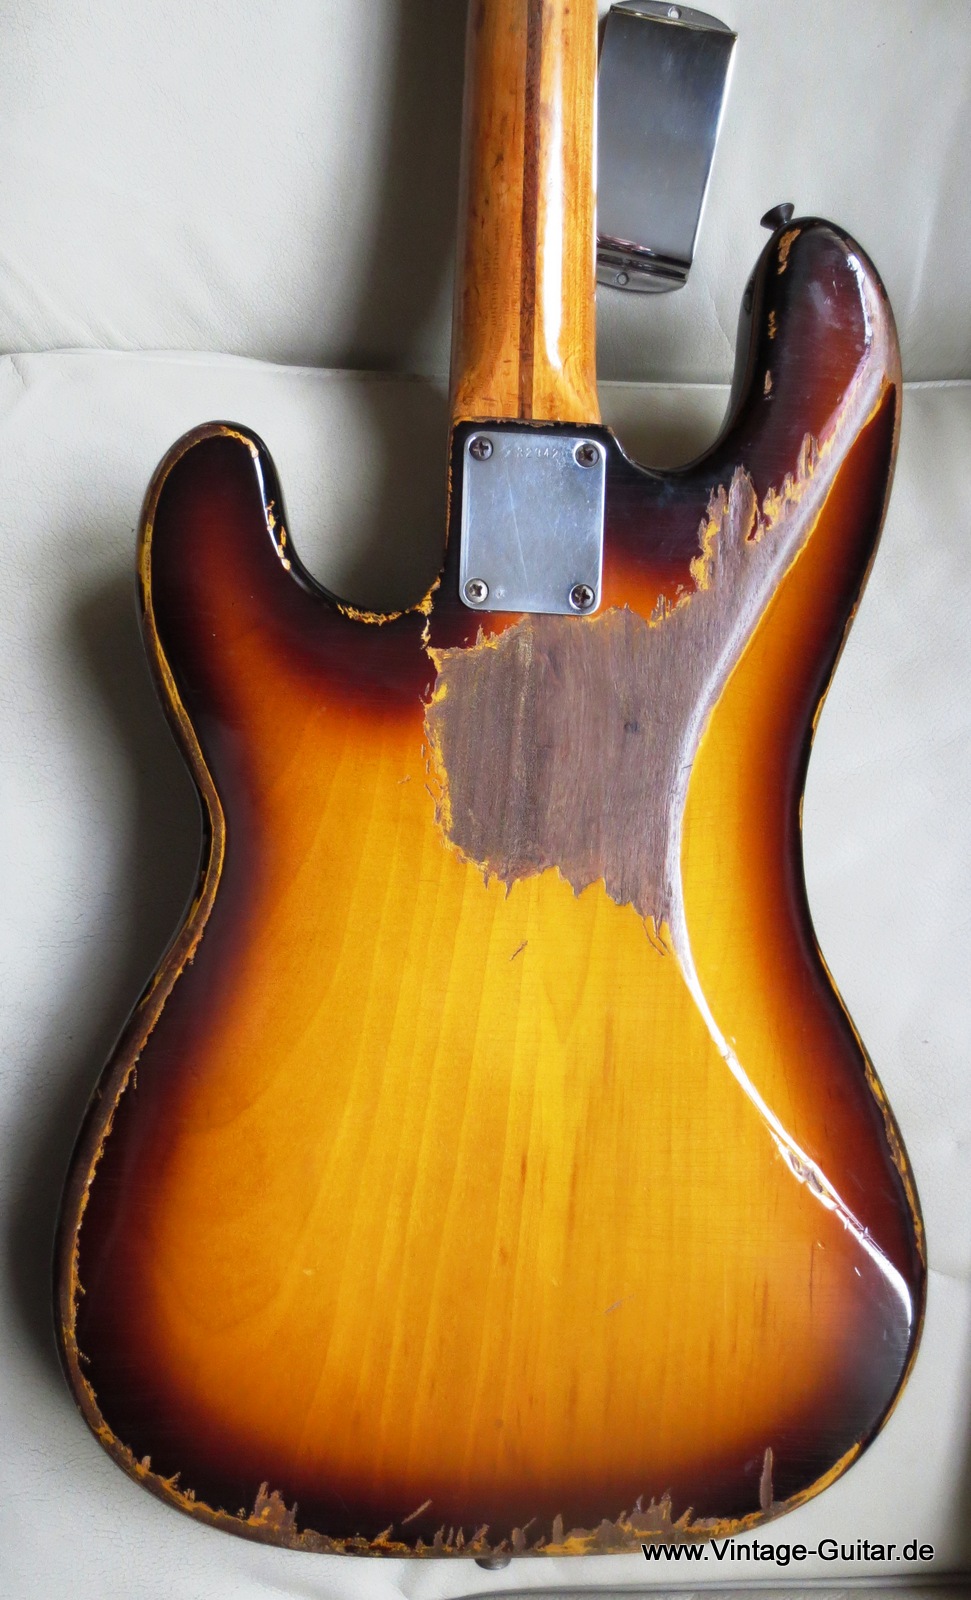 Fender_Precision_Bass_1958-anodized-pickguard-007.JPG